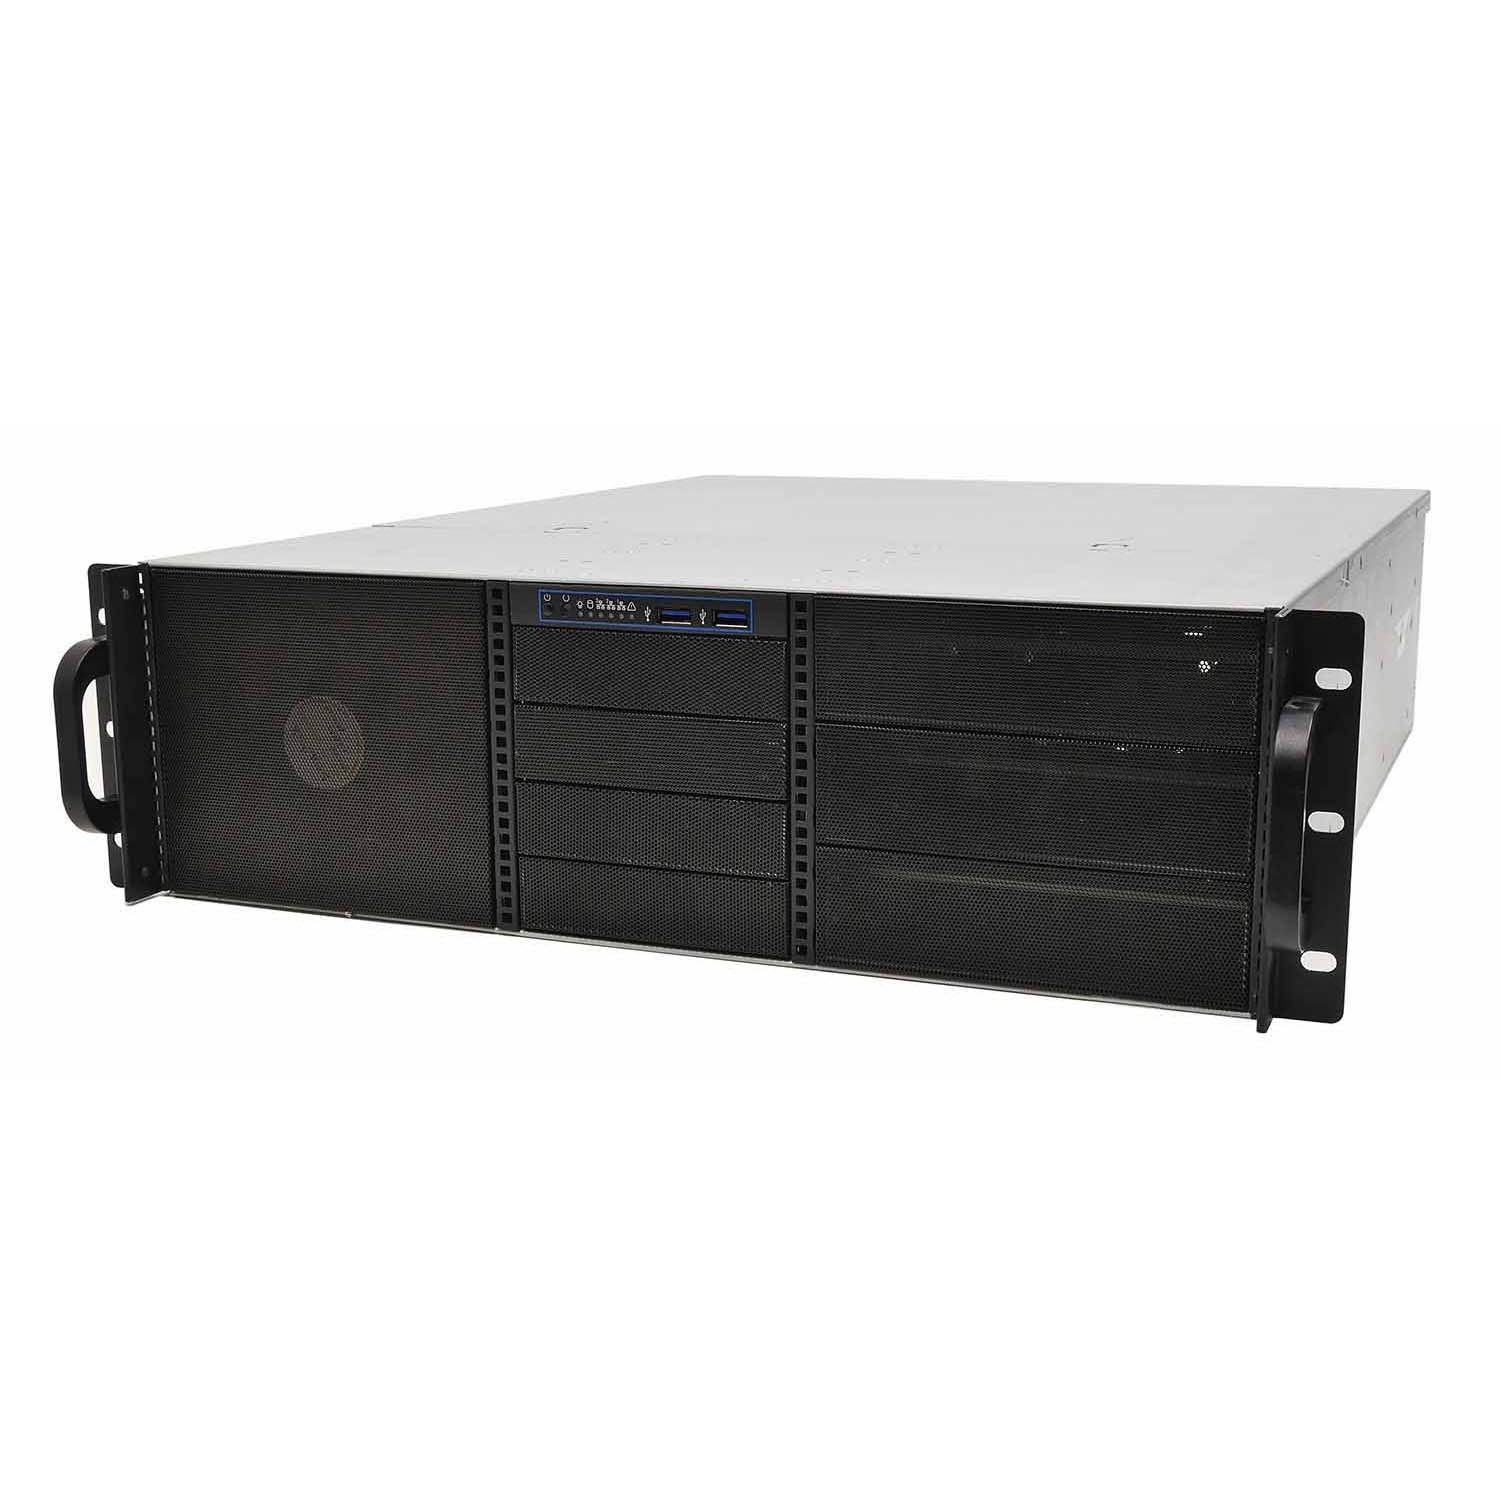 Серверный корпус 3U NR-N3415 2x600Вт (ATX 12x13, 6x5.25ext (10x3.5int), 4x3.5ext, 480мм) черный, NegoRack